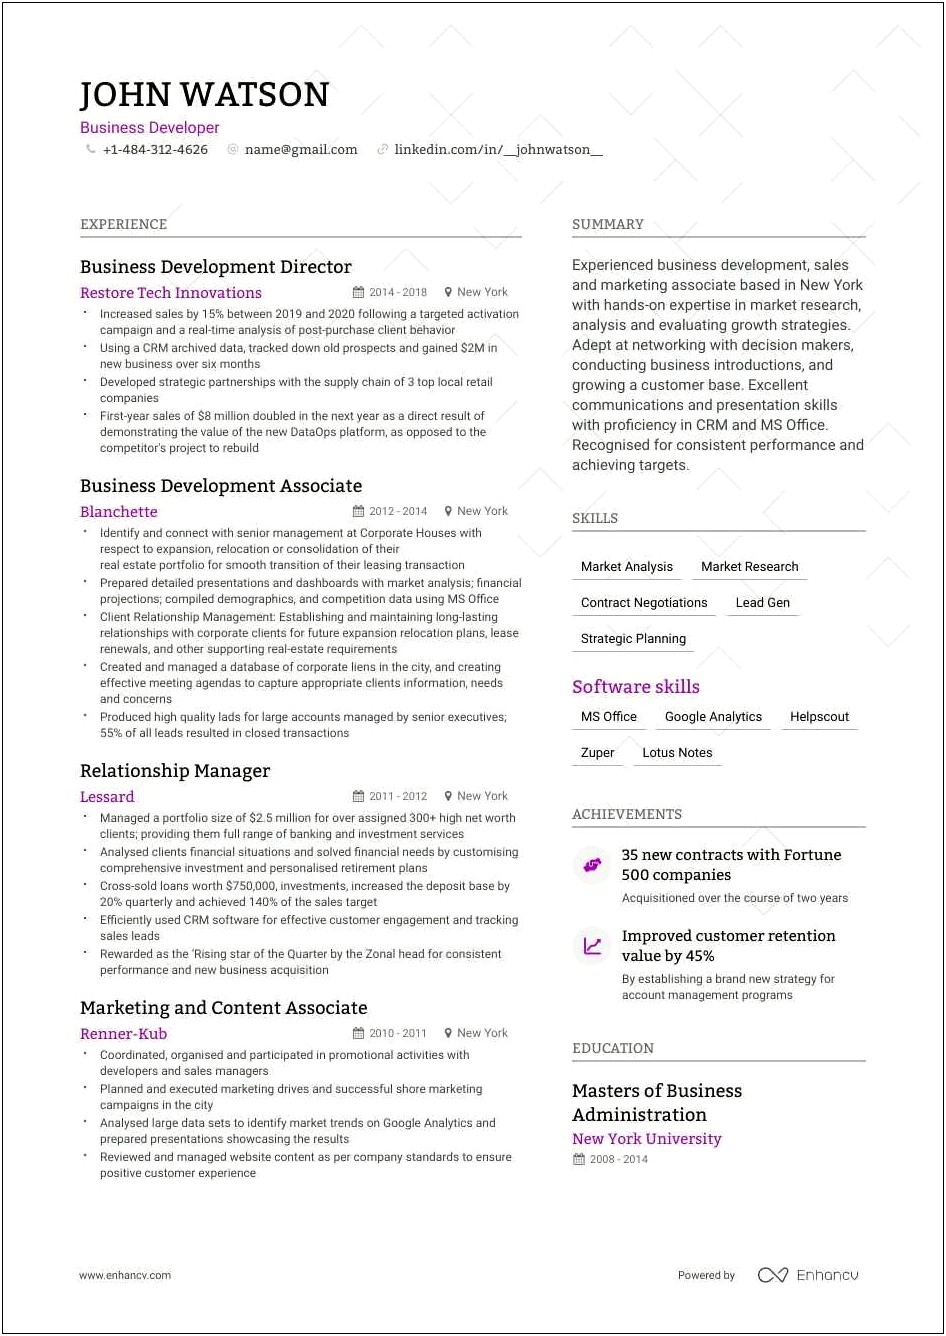 Financial Relationship Specialist Job Description For Resume